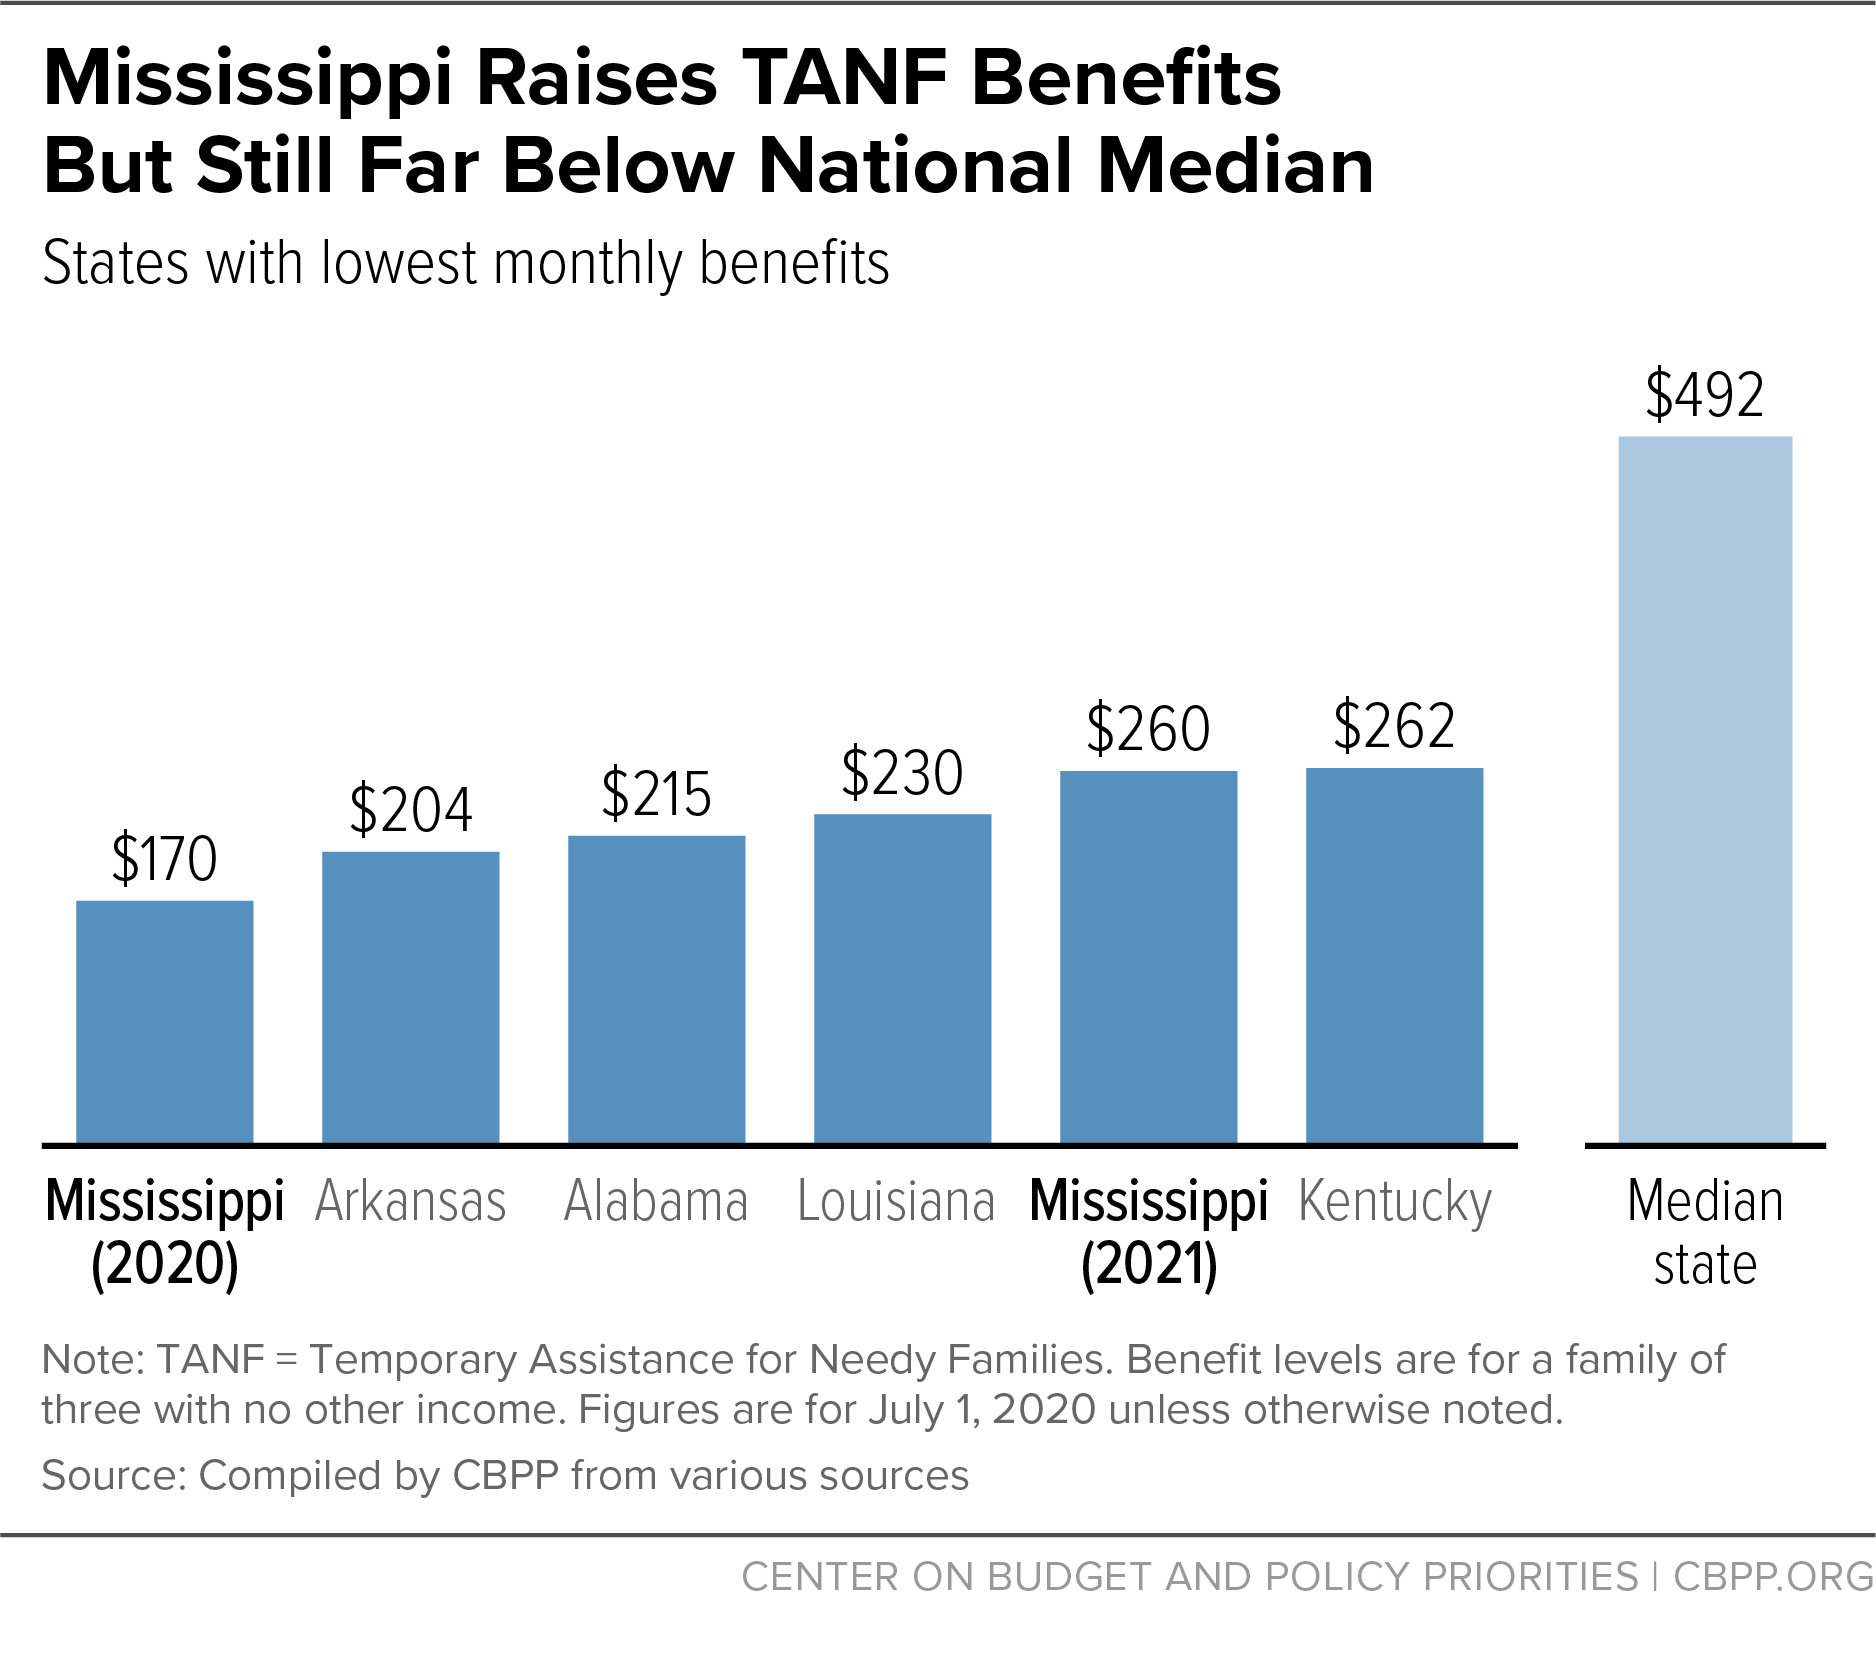 Mississippi Raises TANF Benefits But Still Far Below National Median